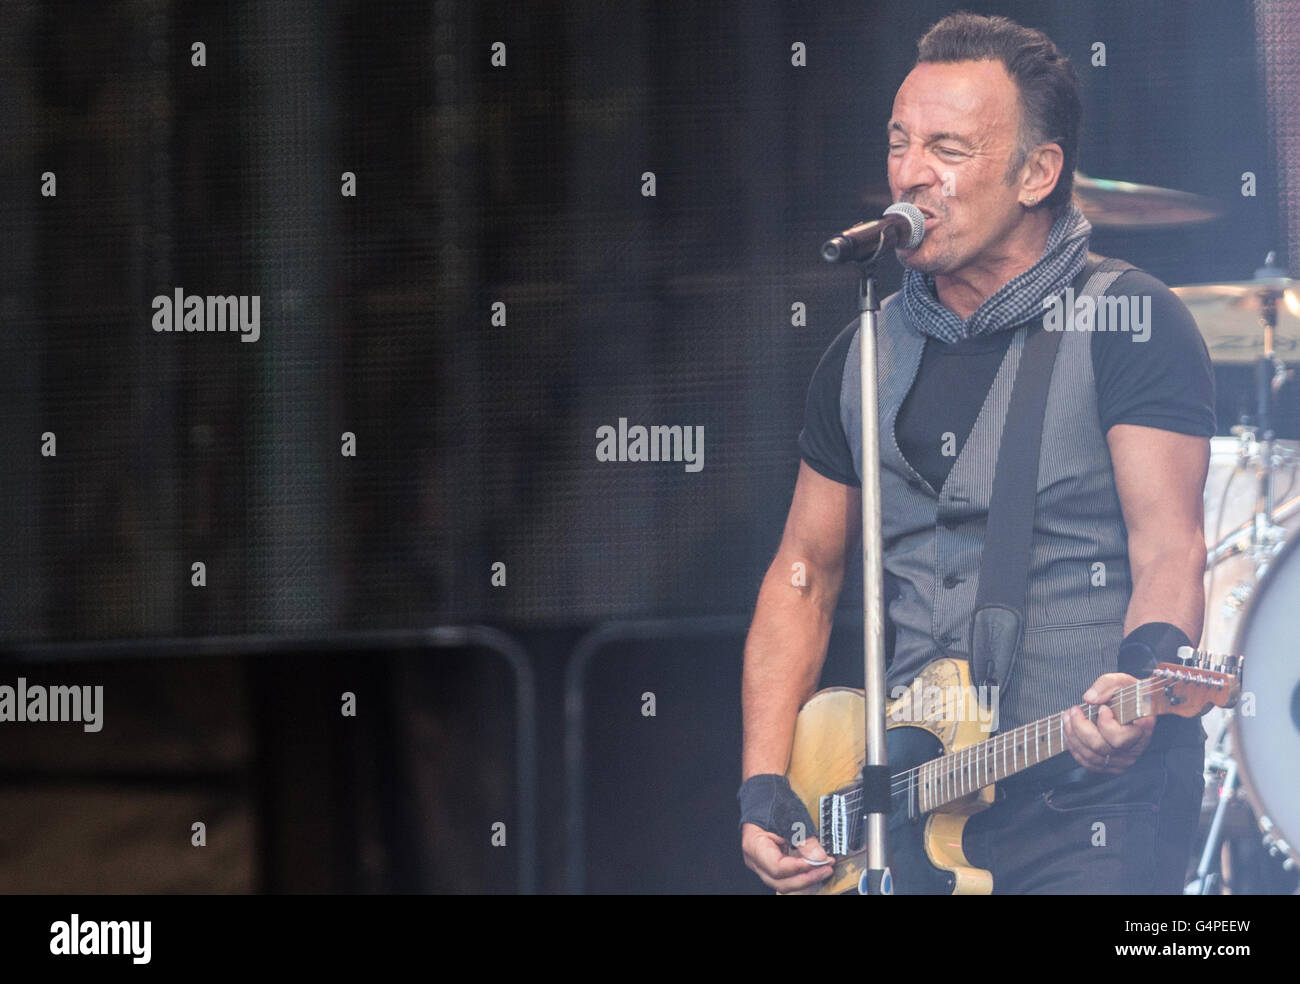 Berlin, Deutschland. 19. Juni 2016. US-Musiker Bruce Springsteen im Olympiastadion während seiner "The River Tour" in Berlin, Deutschland 19. Juni 2016 durchführt. Foto: Paul Zinken/Dpa/Alamy Live News Stockfoto